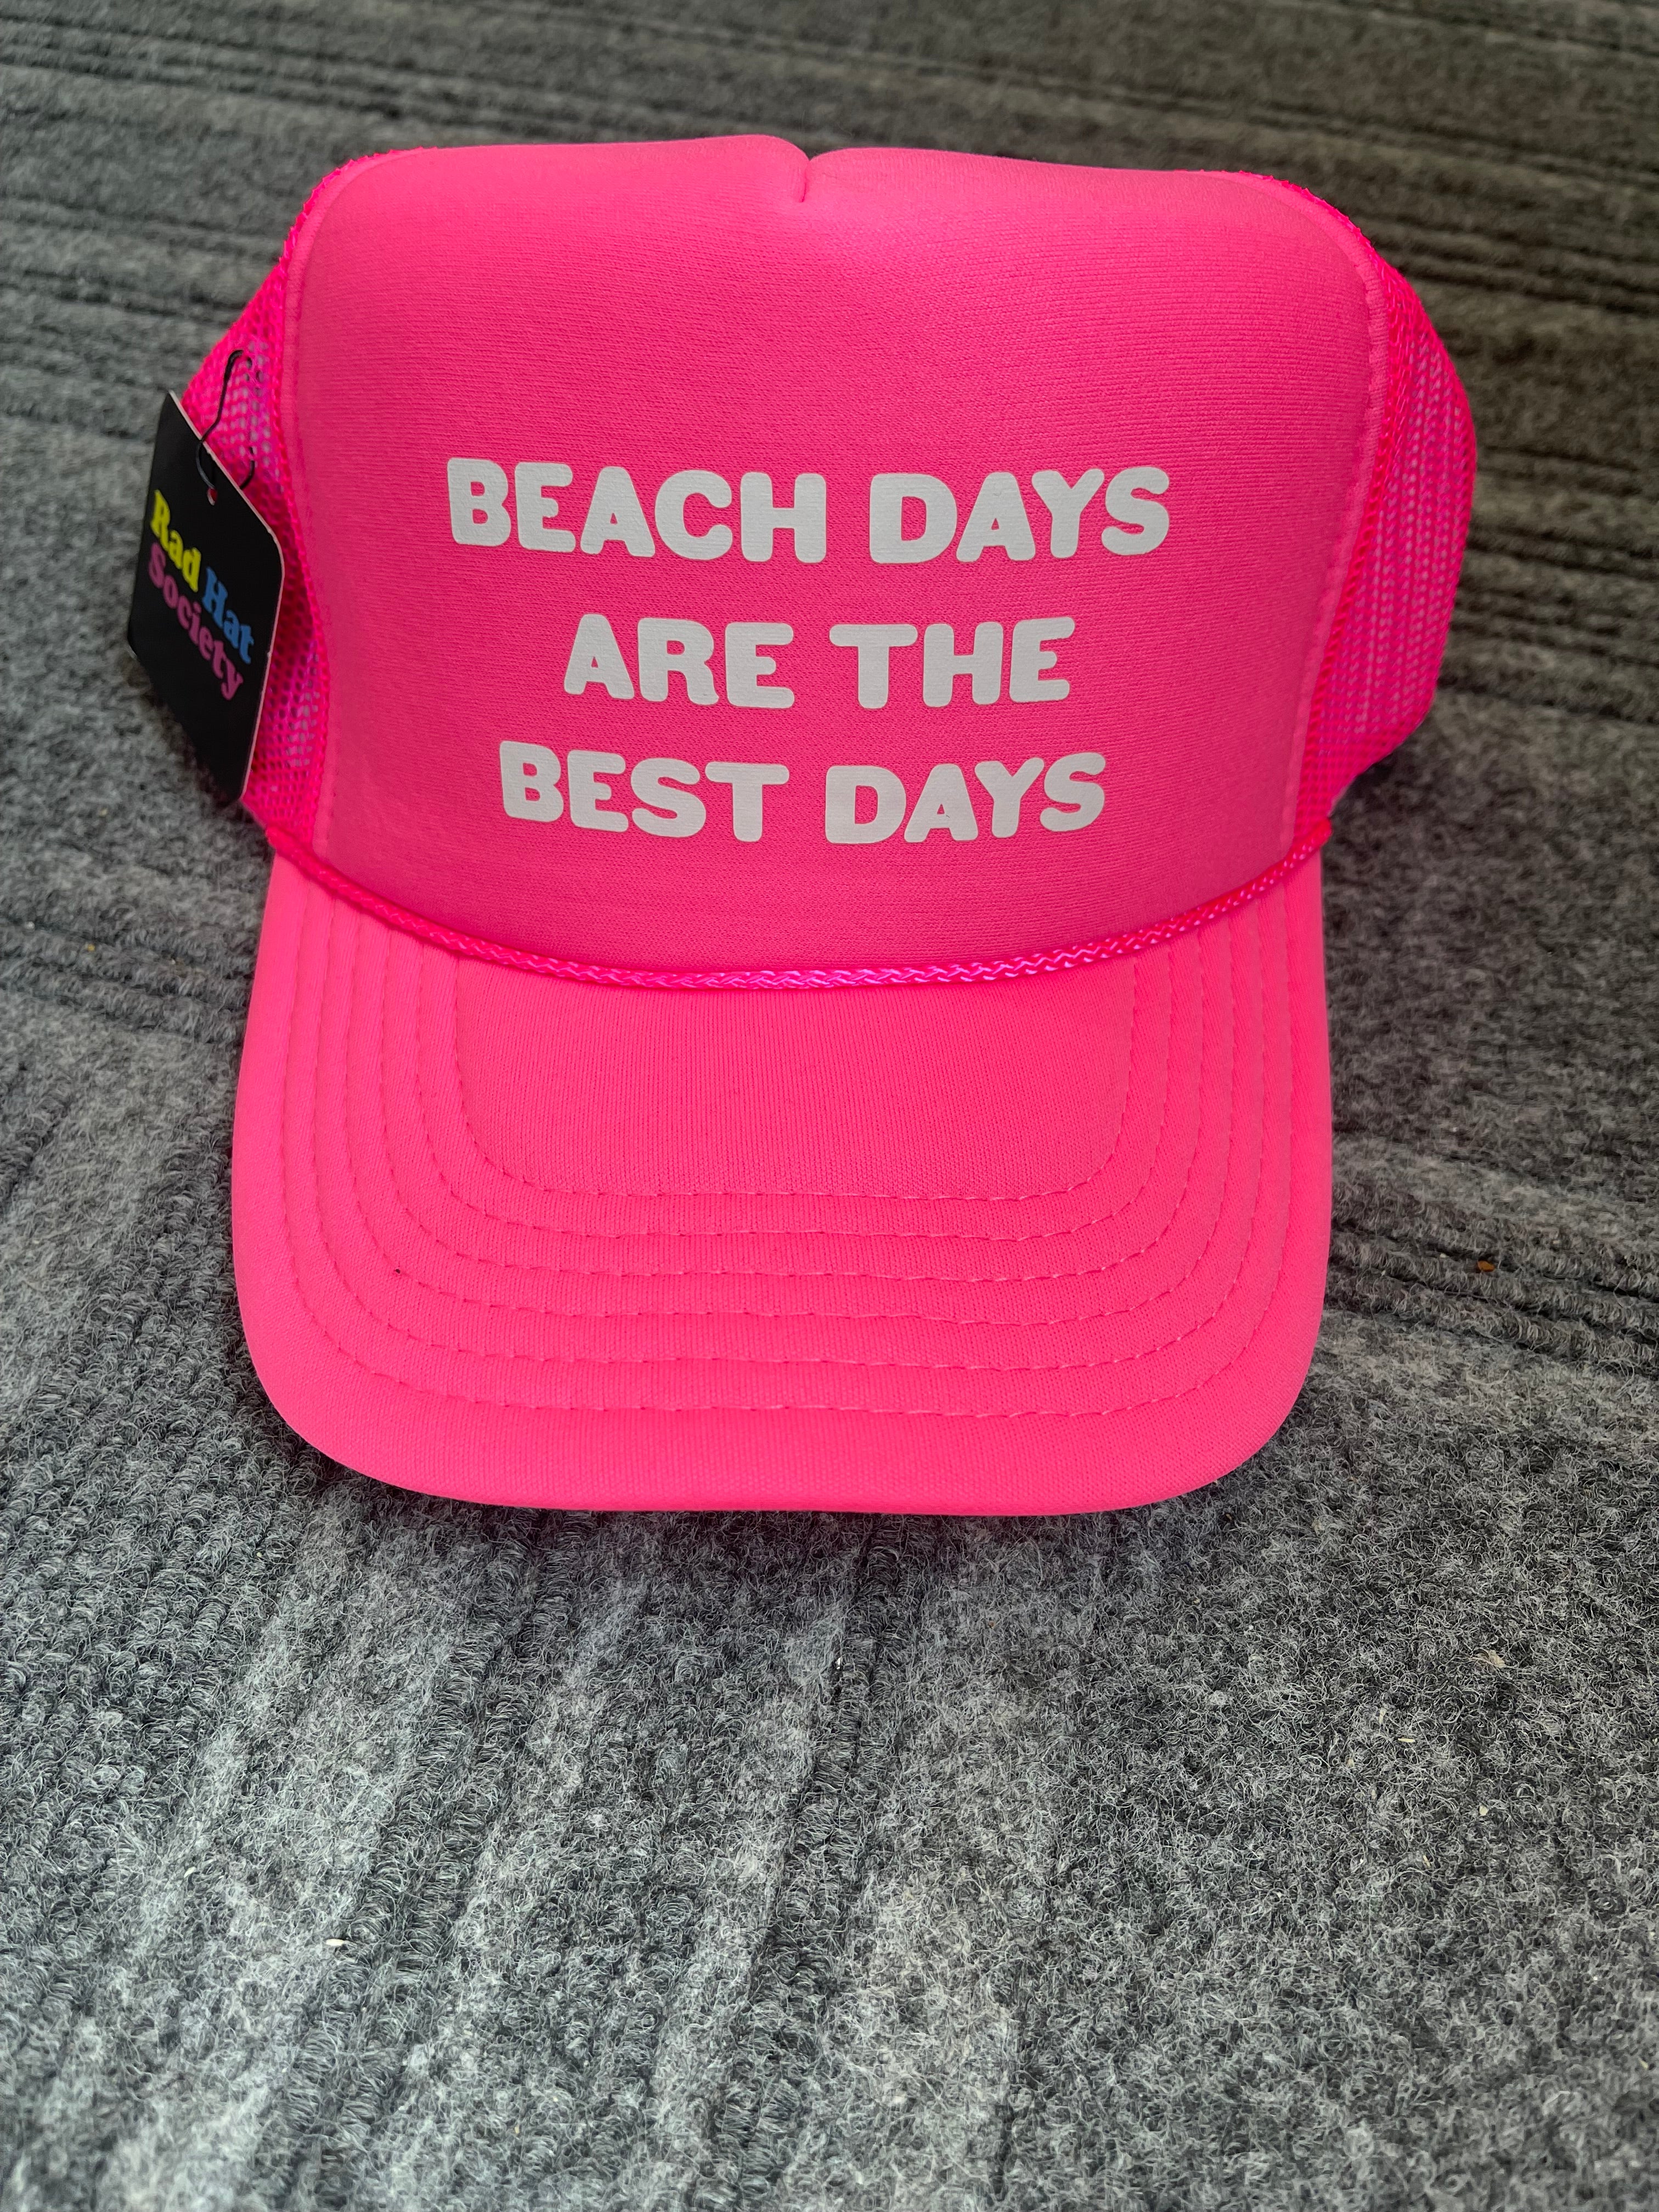 Beach Days are the Best Days